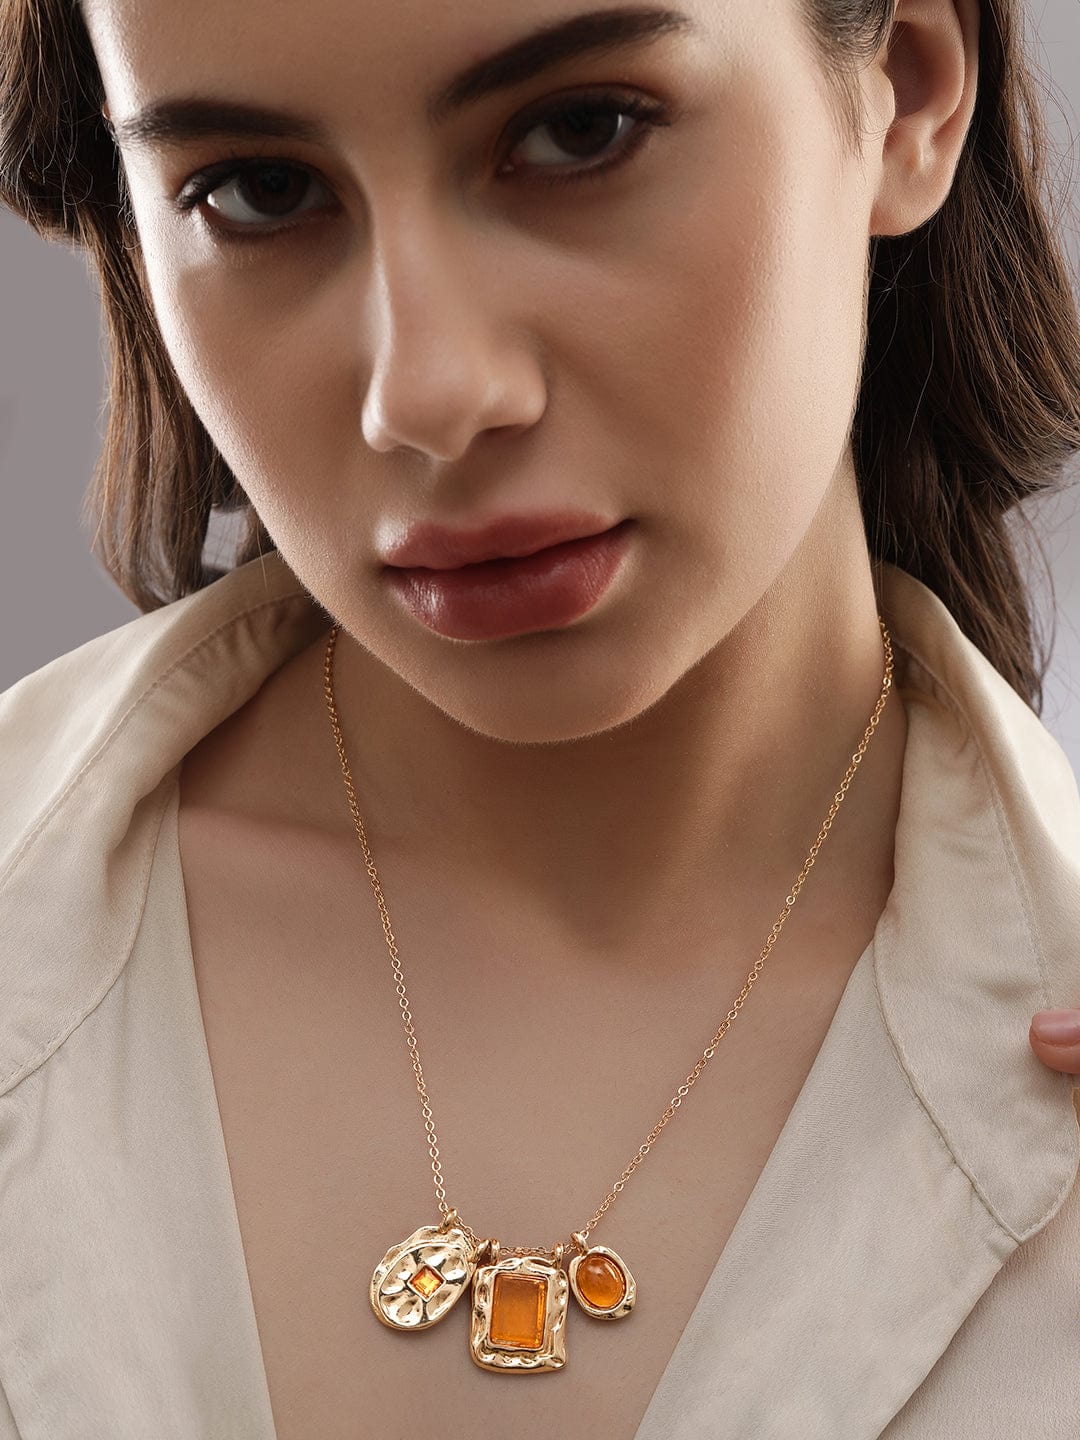 Rubans Voguish 18K Gold plated Crystal studded pendant Necklace Necklace